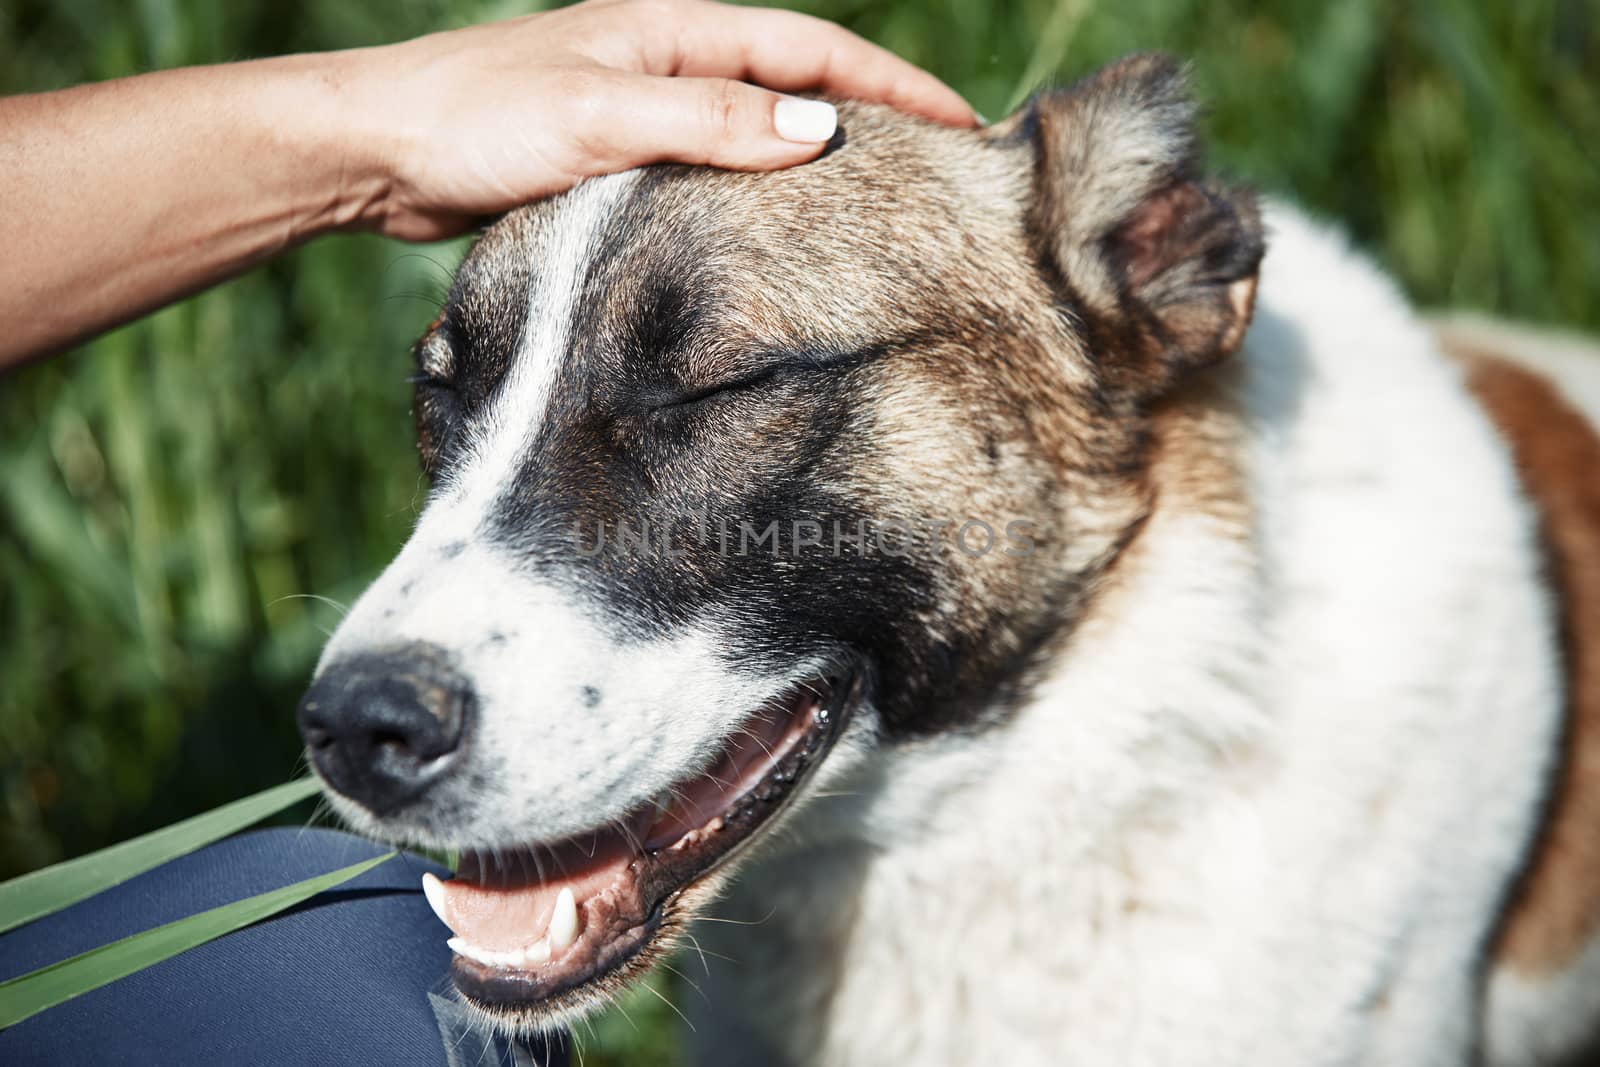 Human pampering dog by Novic